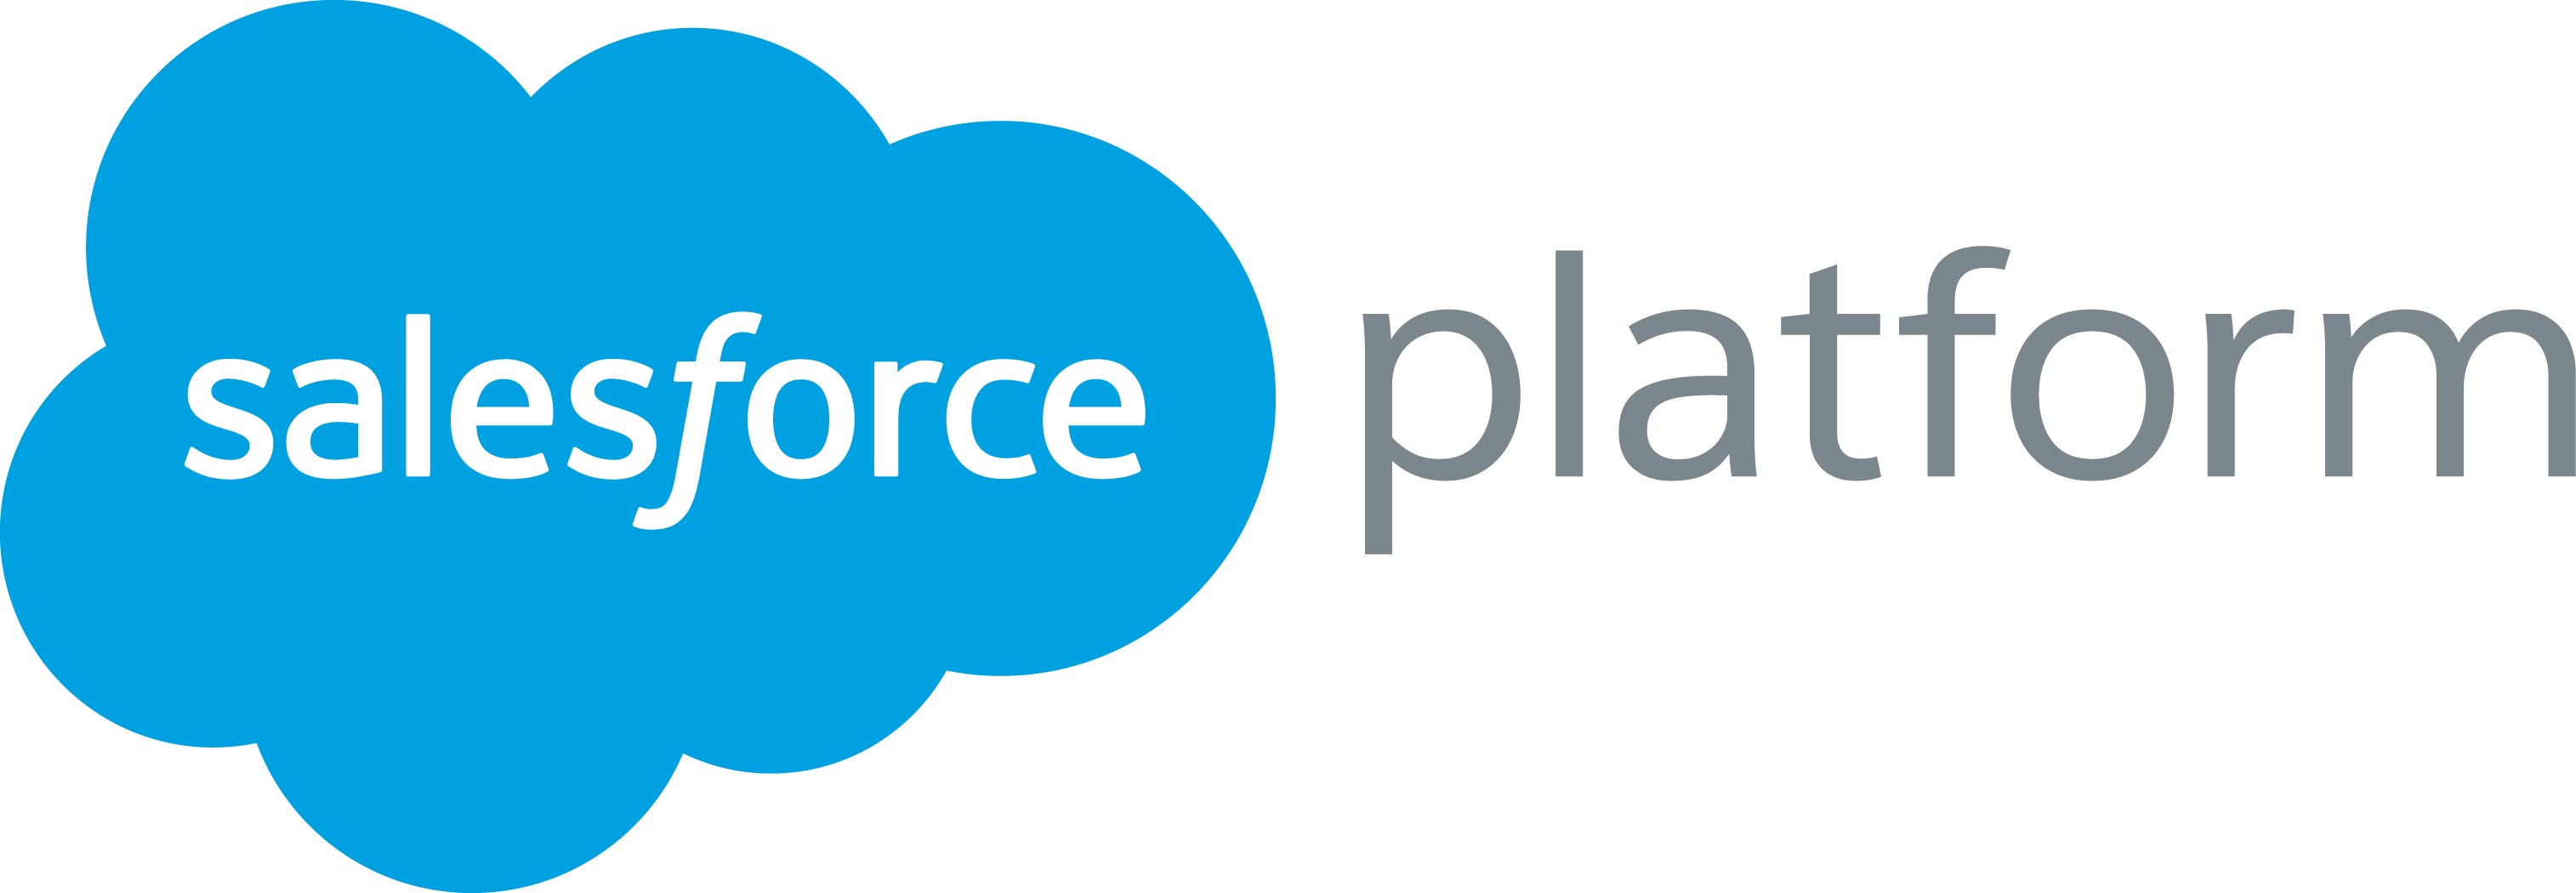 Salesforce.com Logo - Salesforce App Cloud | The Leading Enterprise PaaS | Salesforce ...